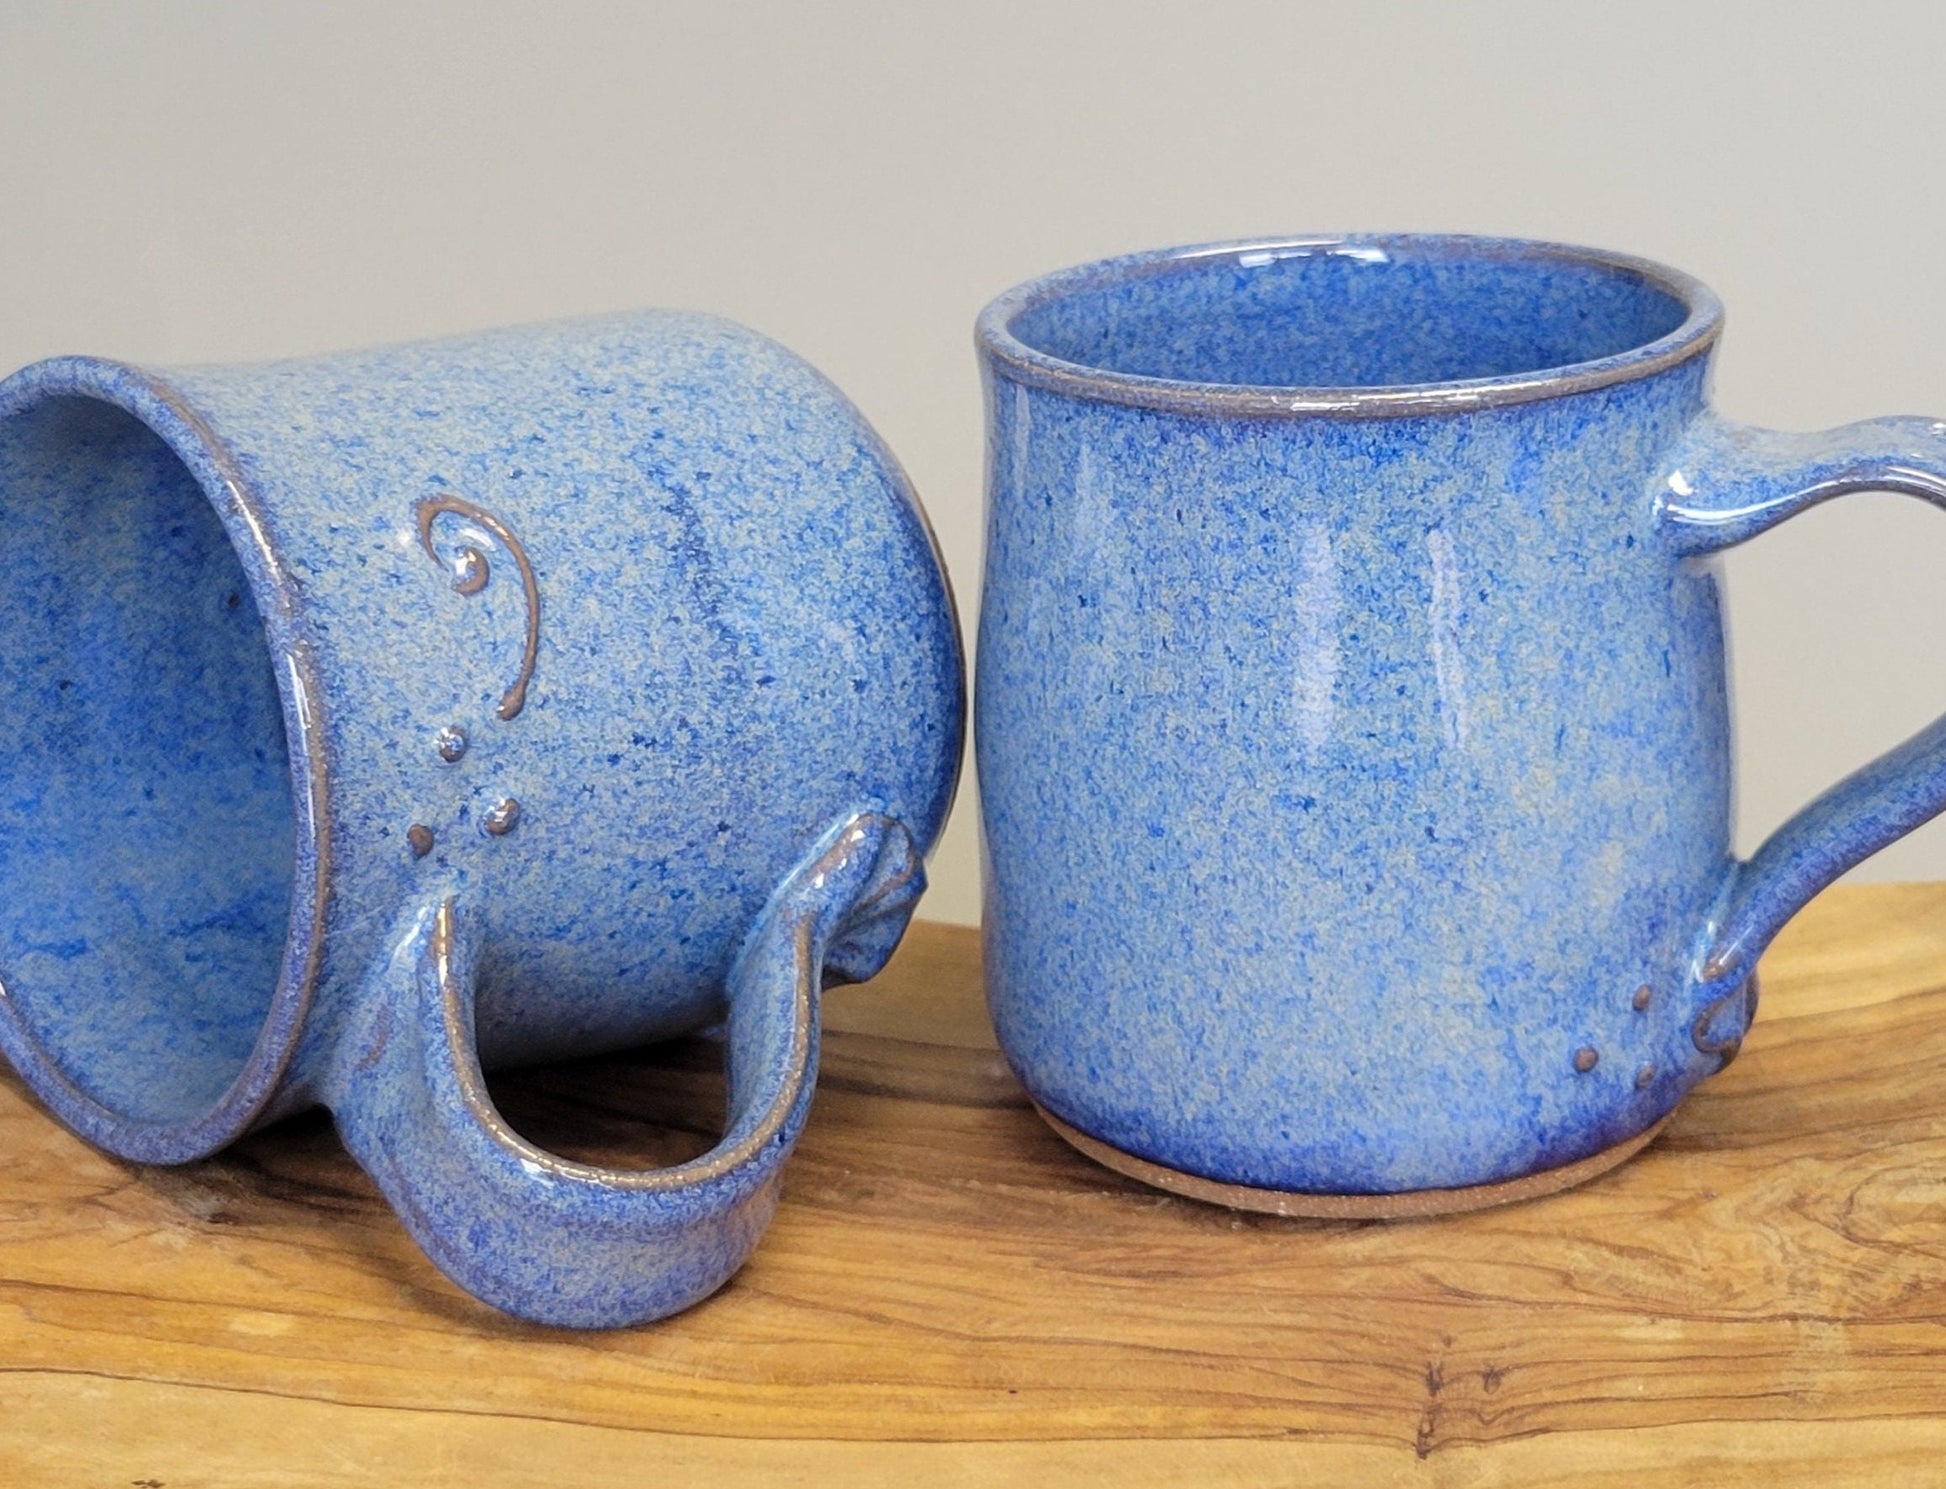 Large Ceramic Cup Handmade, Large Ceramic Coffee Mugs